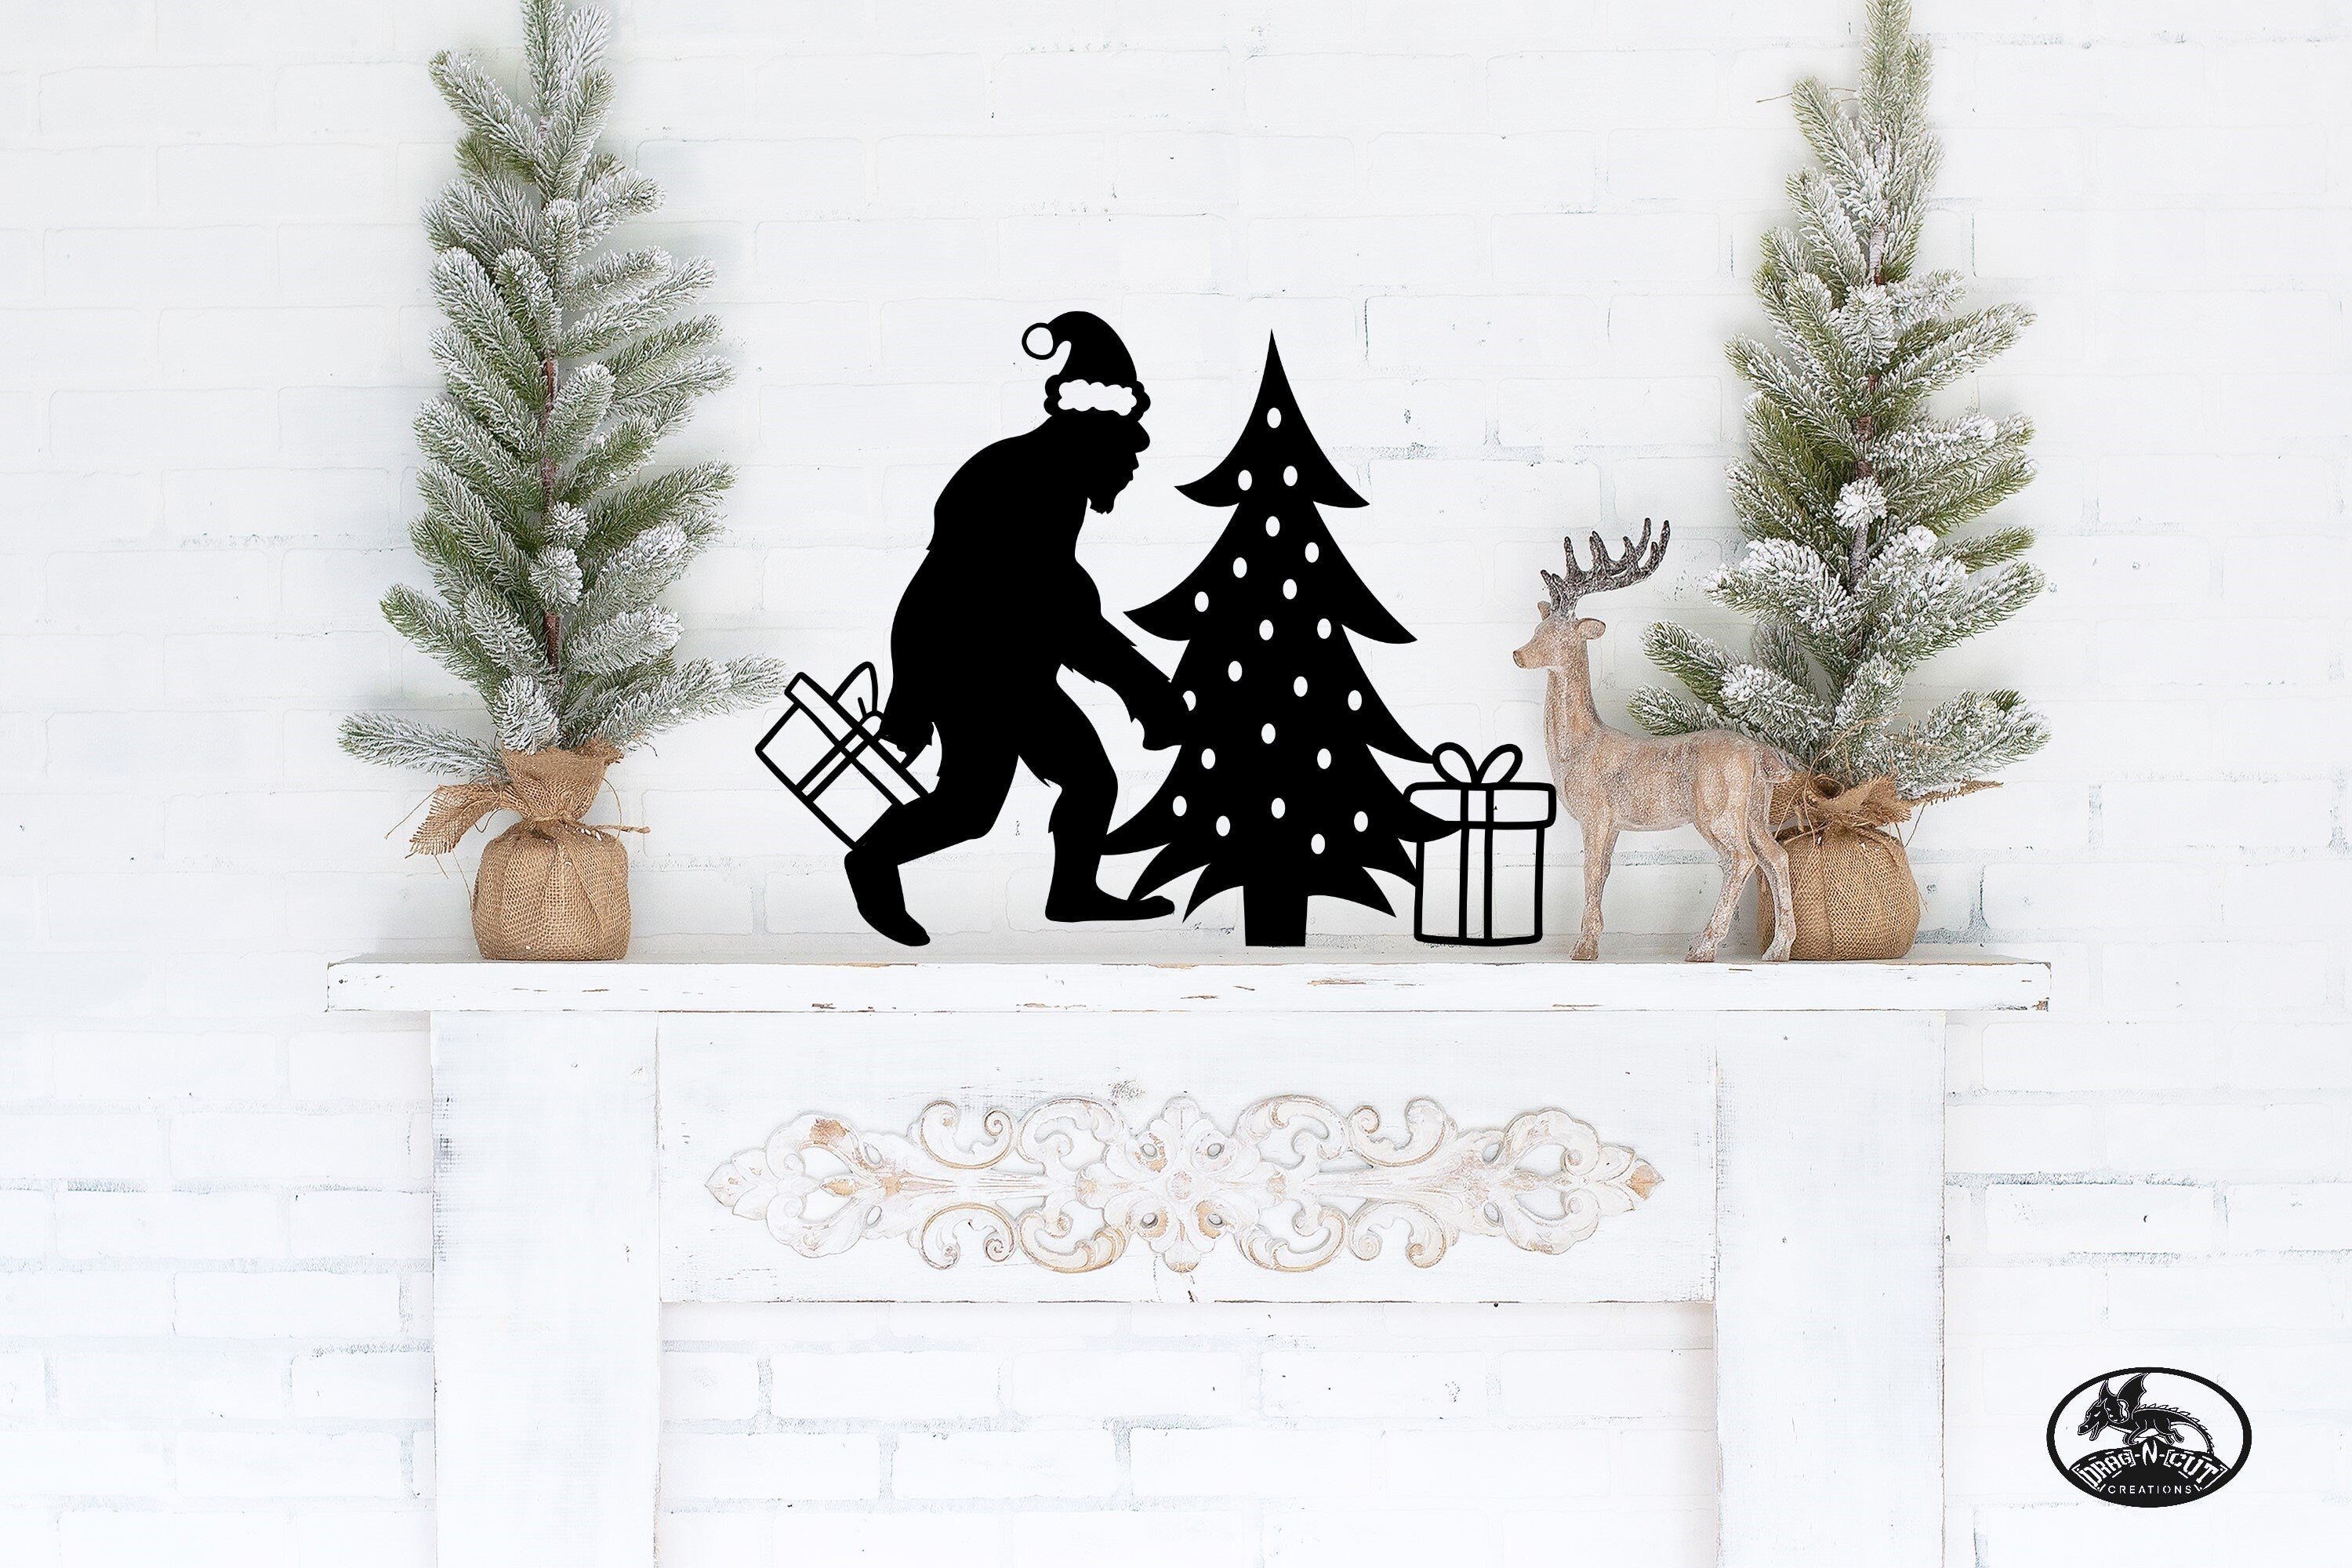 Bigfoot Sasquatch Santa with a Gift, Metal Wall Art Christmas Tree Décor Sign